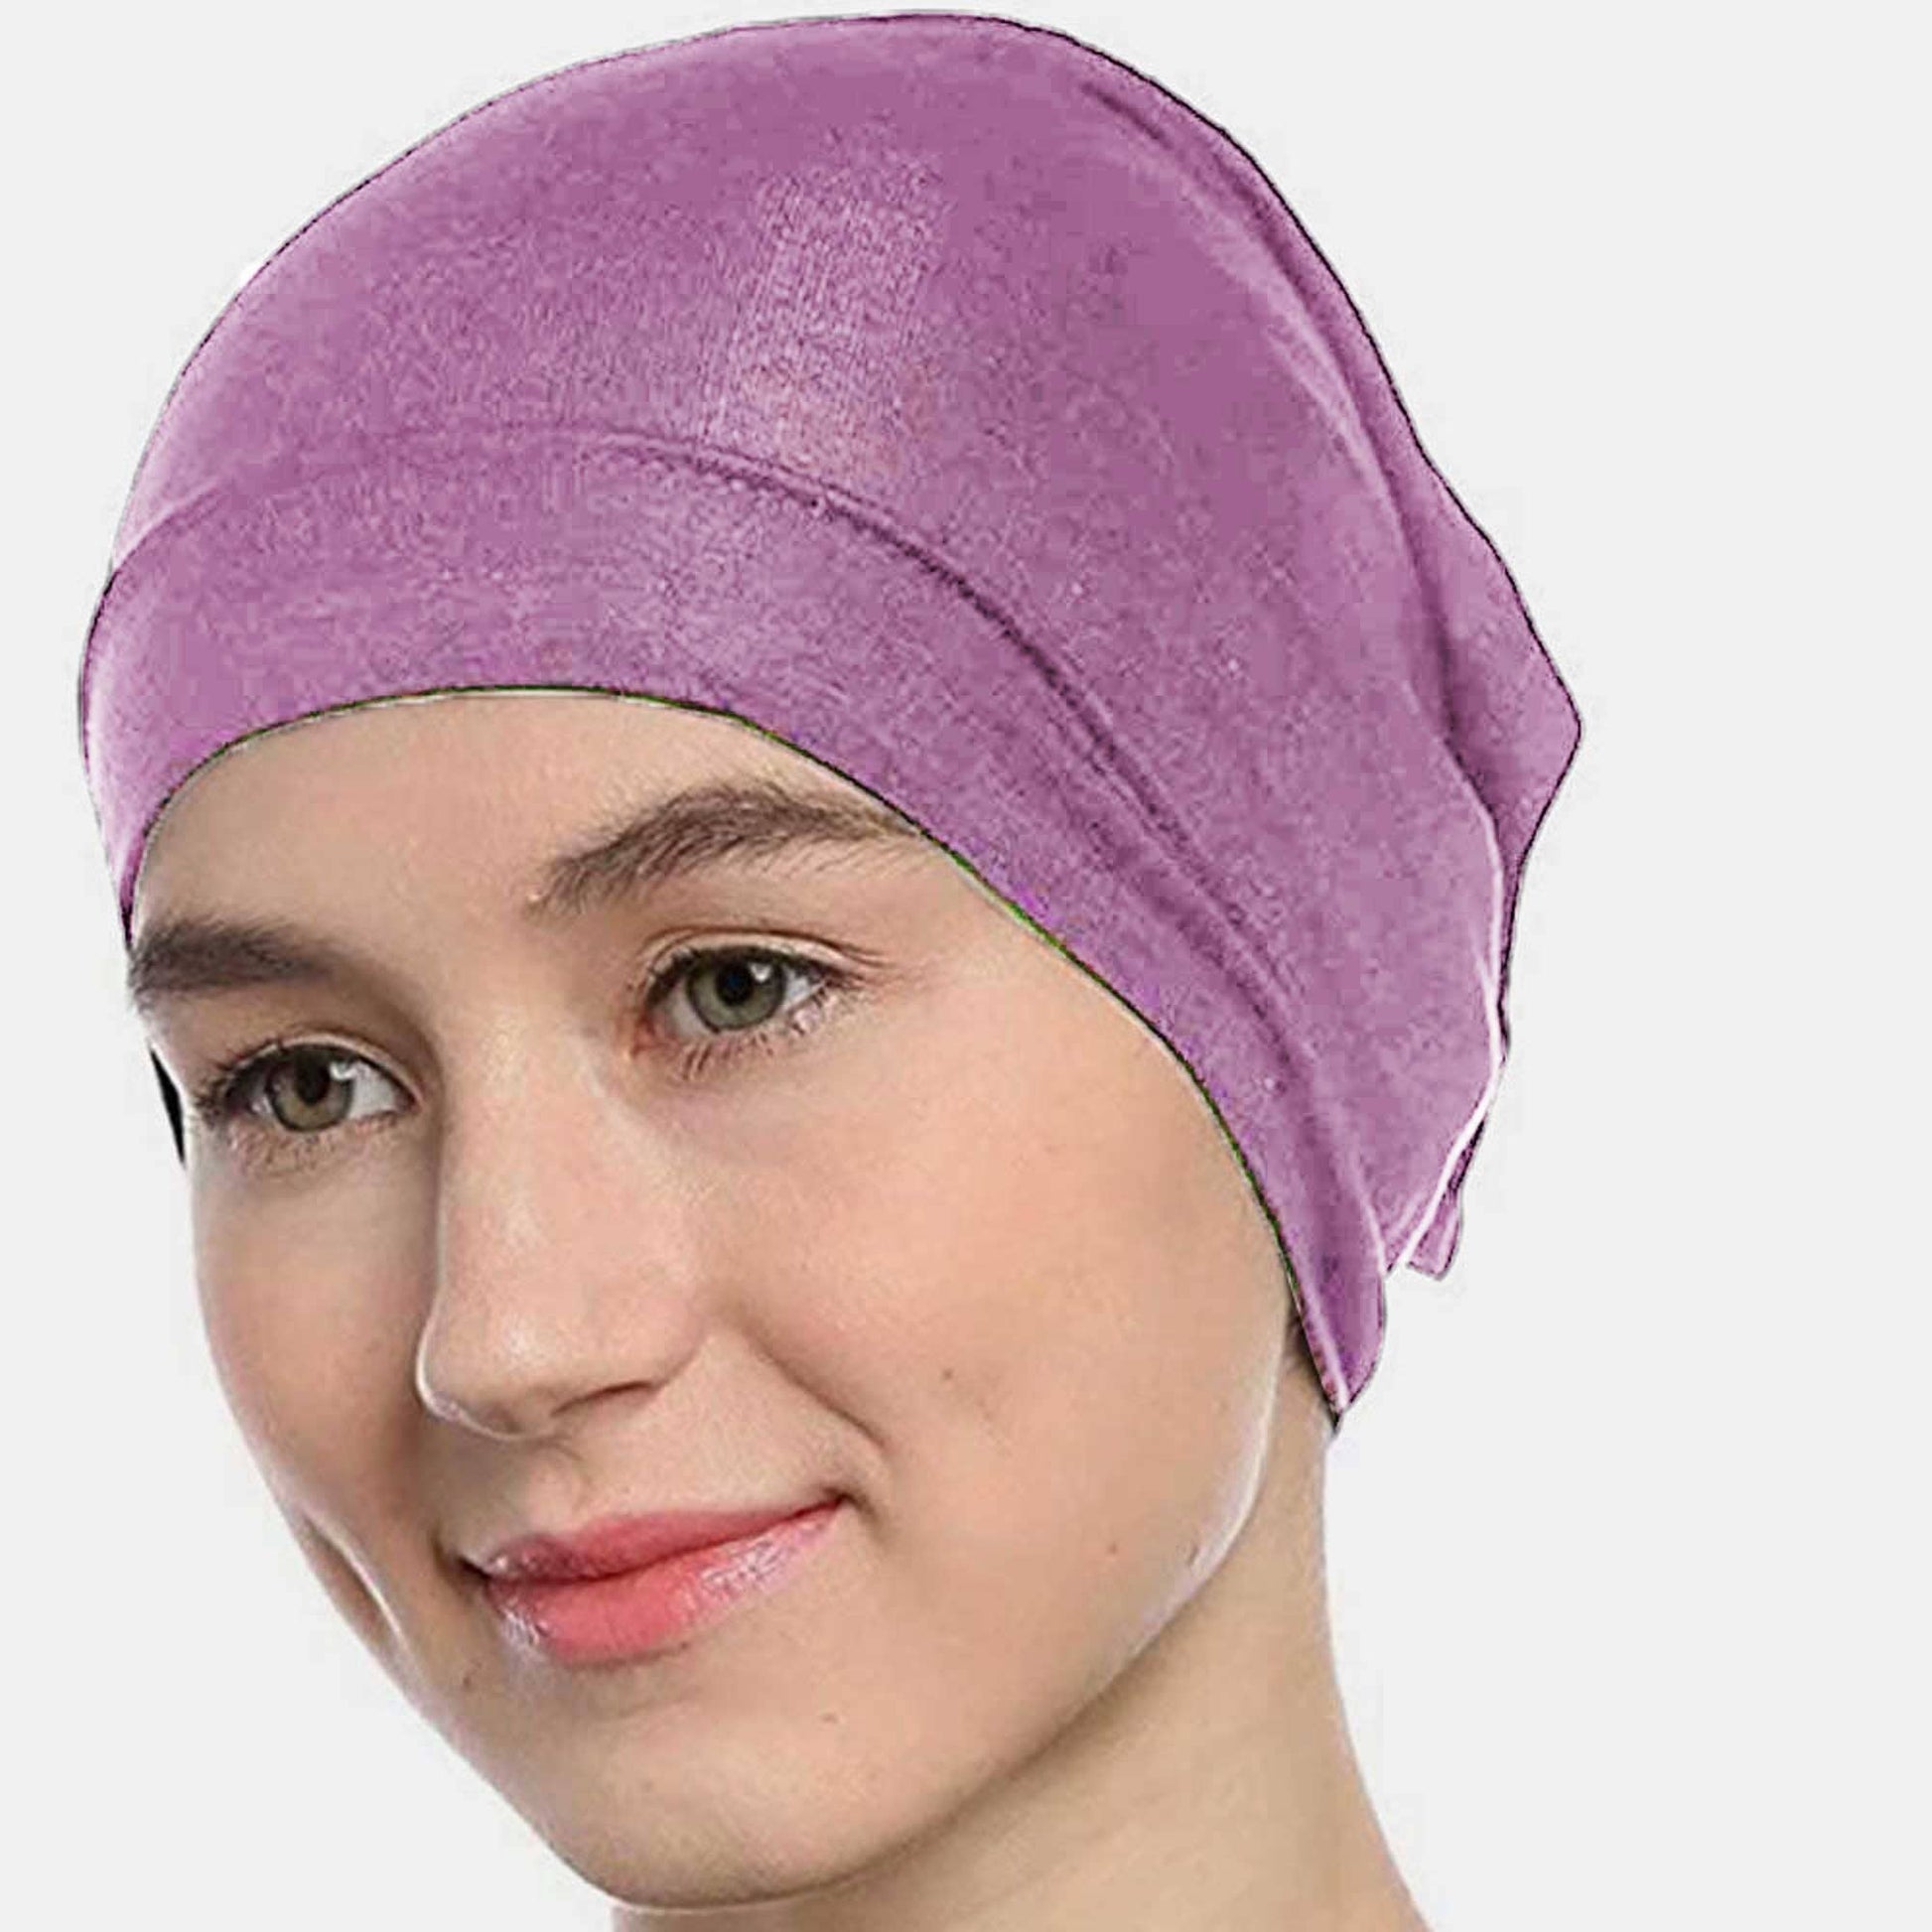 Women's Under Scarf Hijab Cap Women's Accessories De Artistic Pink 